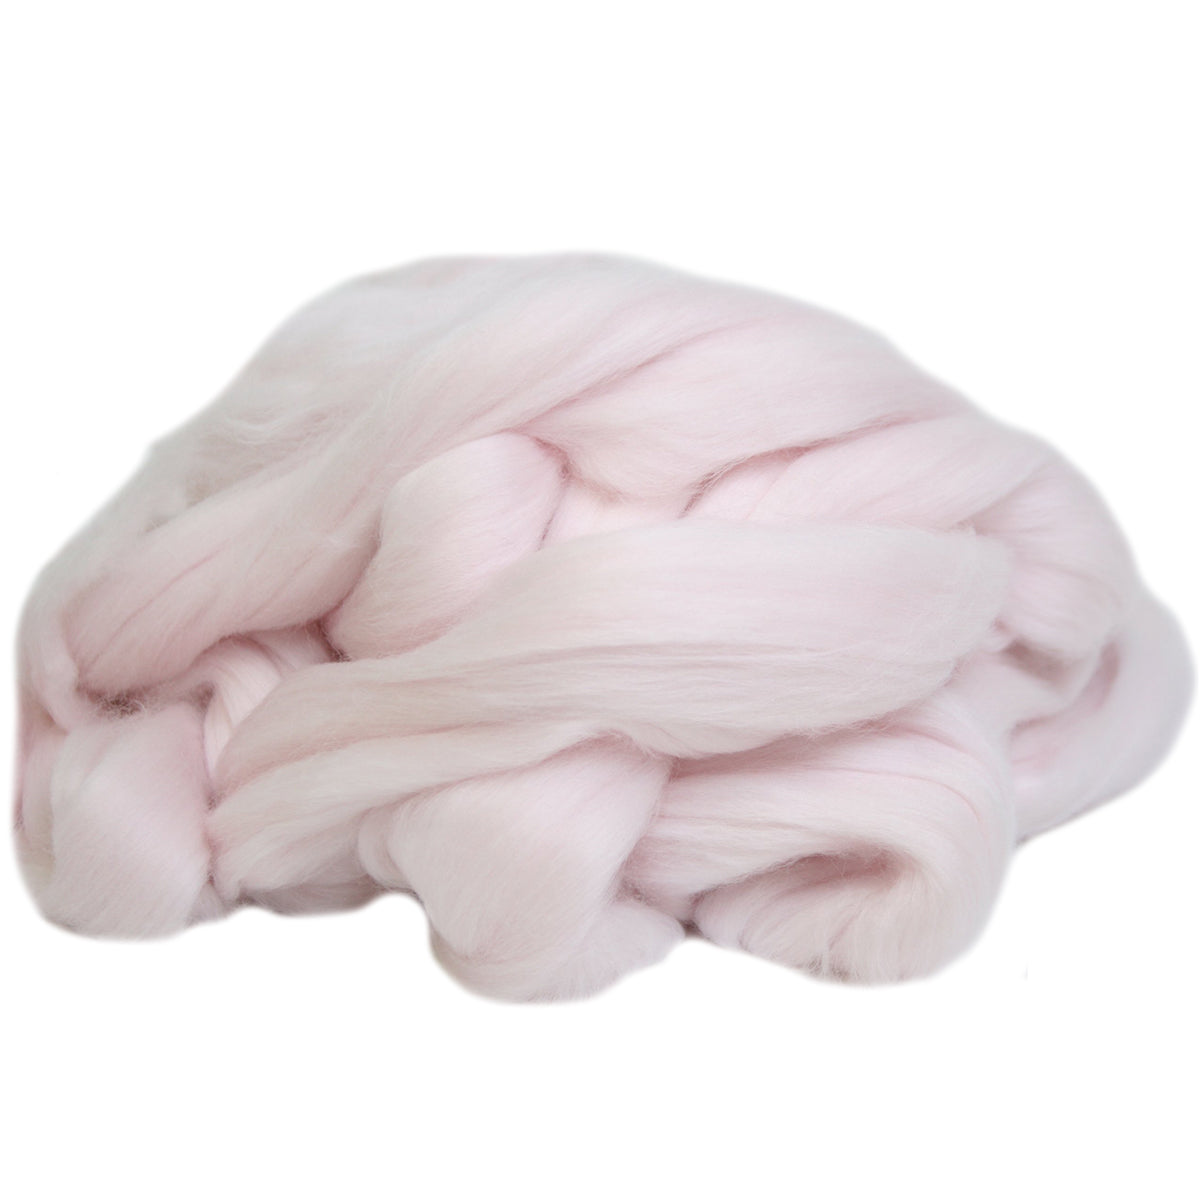 Merino Wool Top Pink Lace 450g